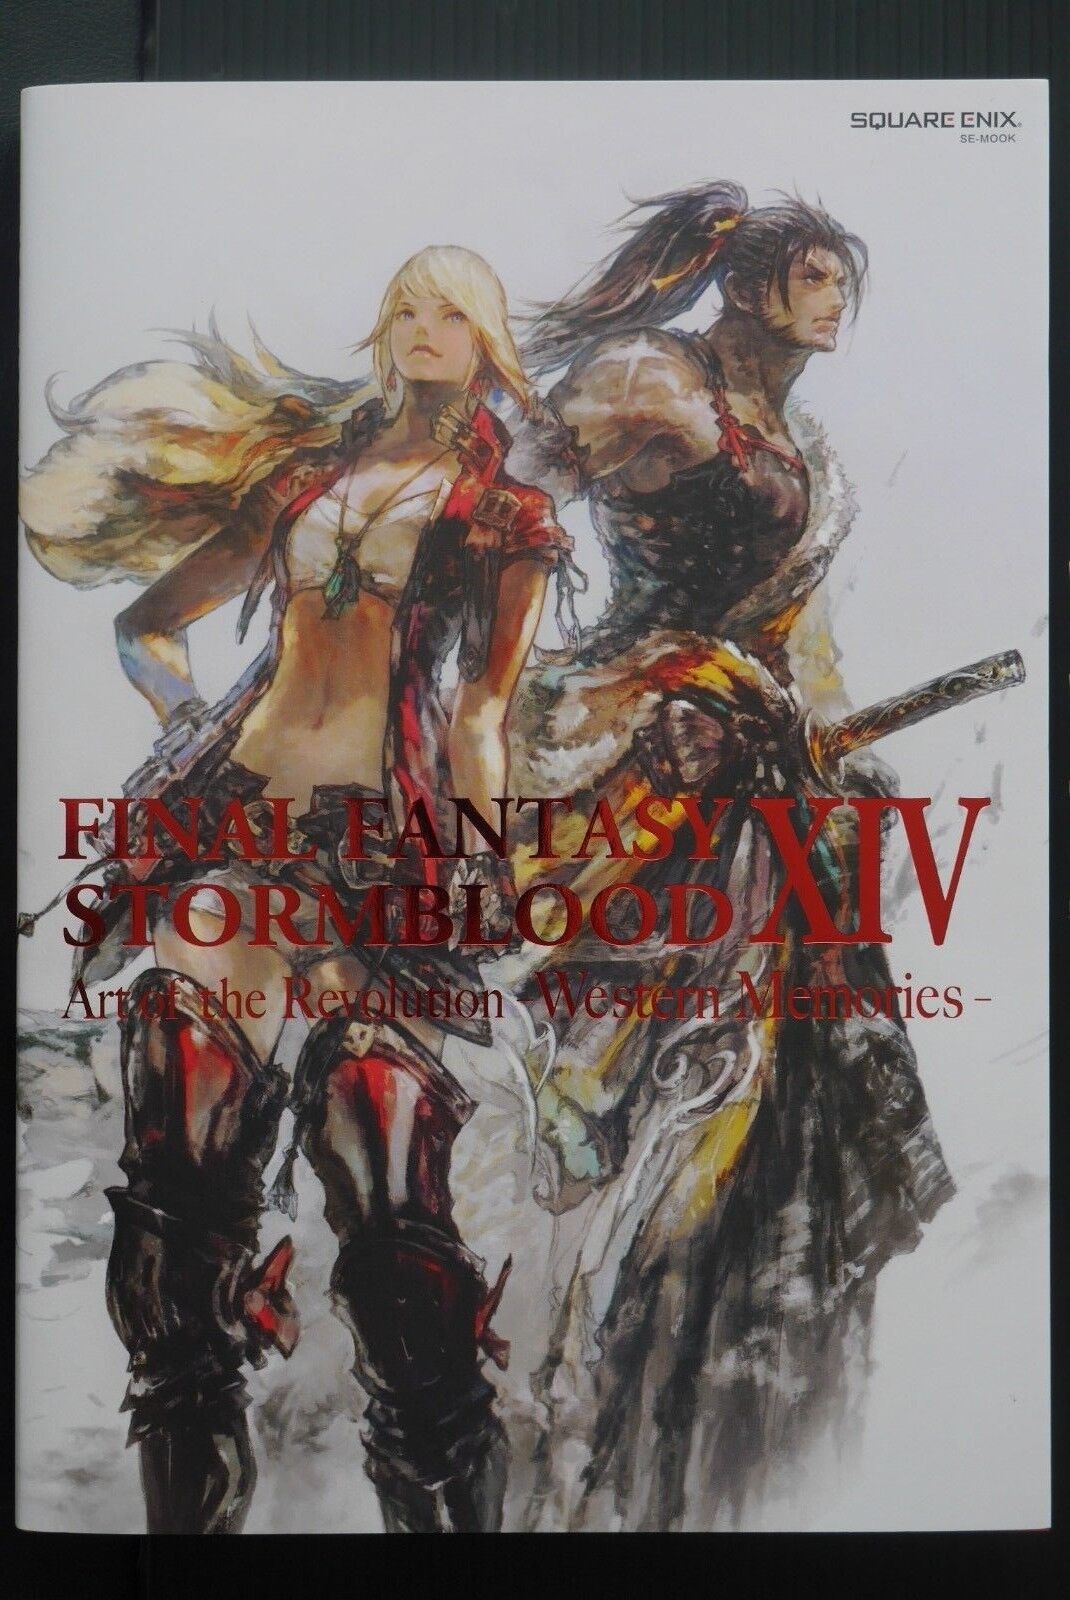 JAPAN Final Fantasy XIV: Stormblood Art of the Revolution Western Memories (Book